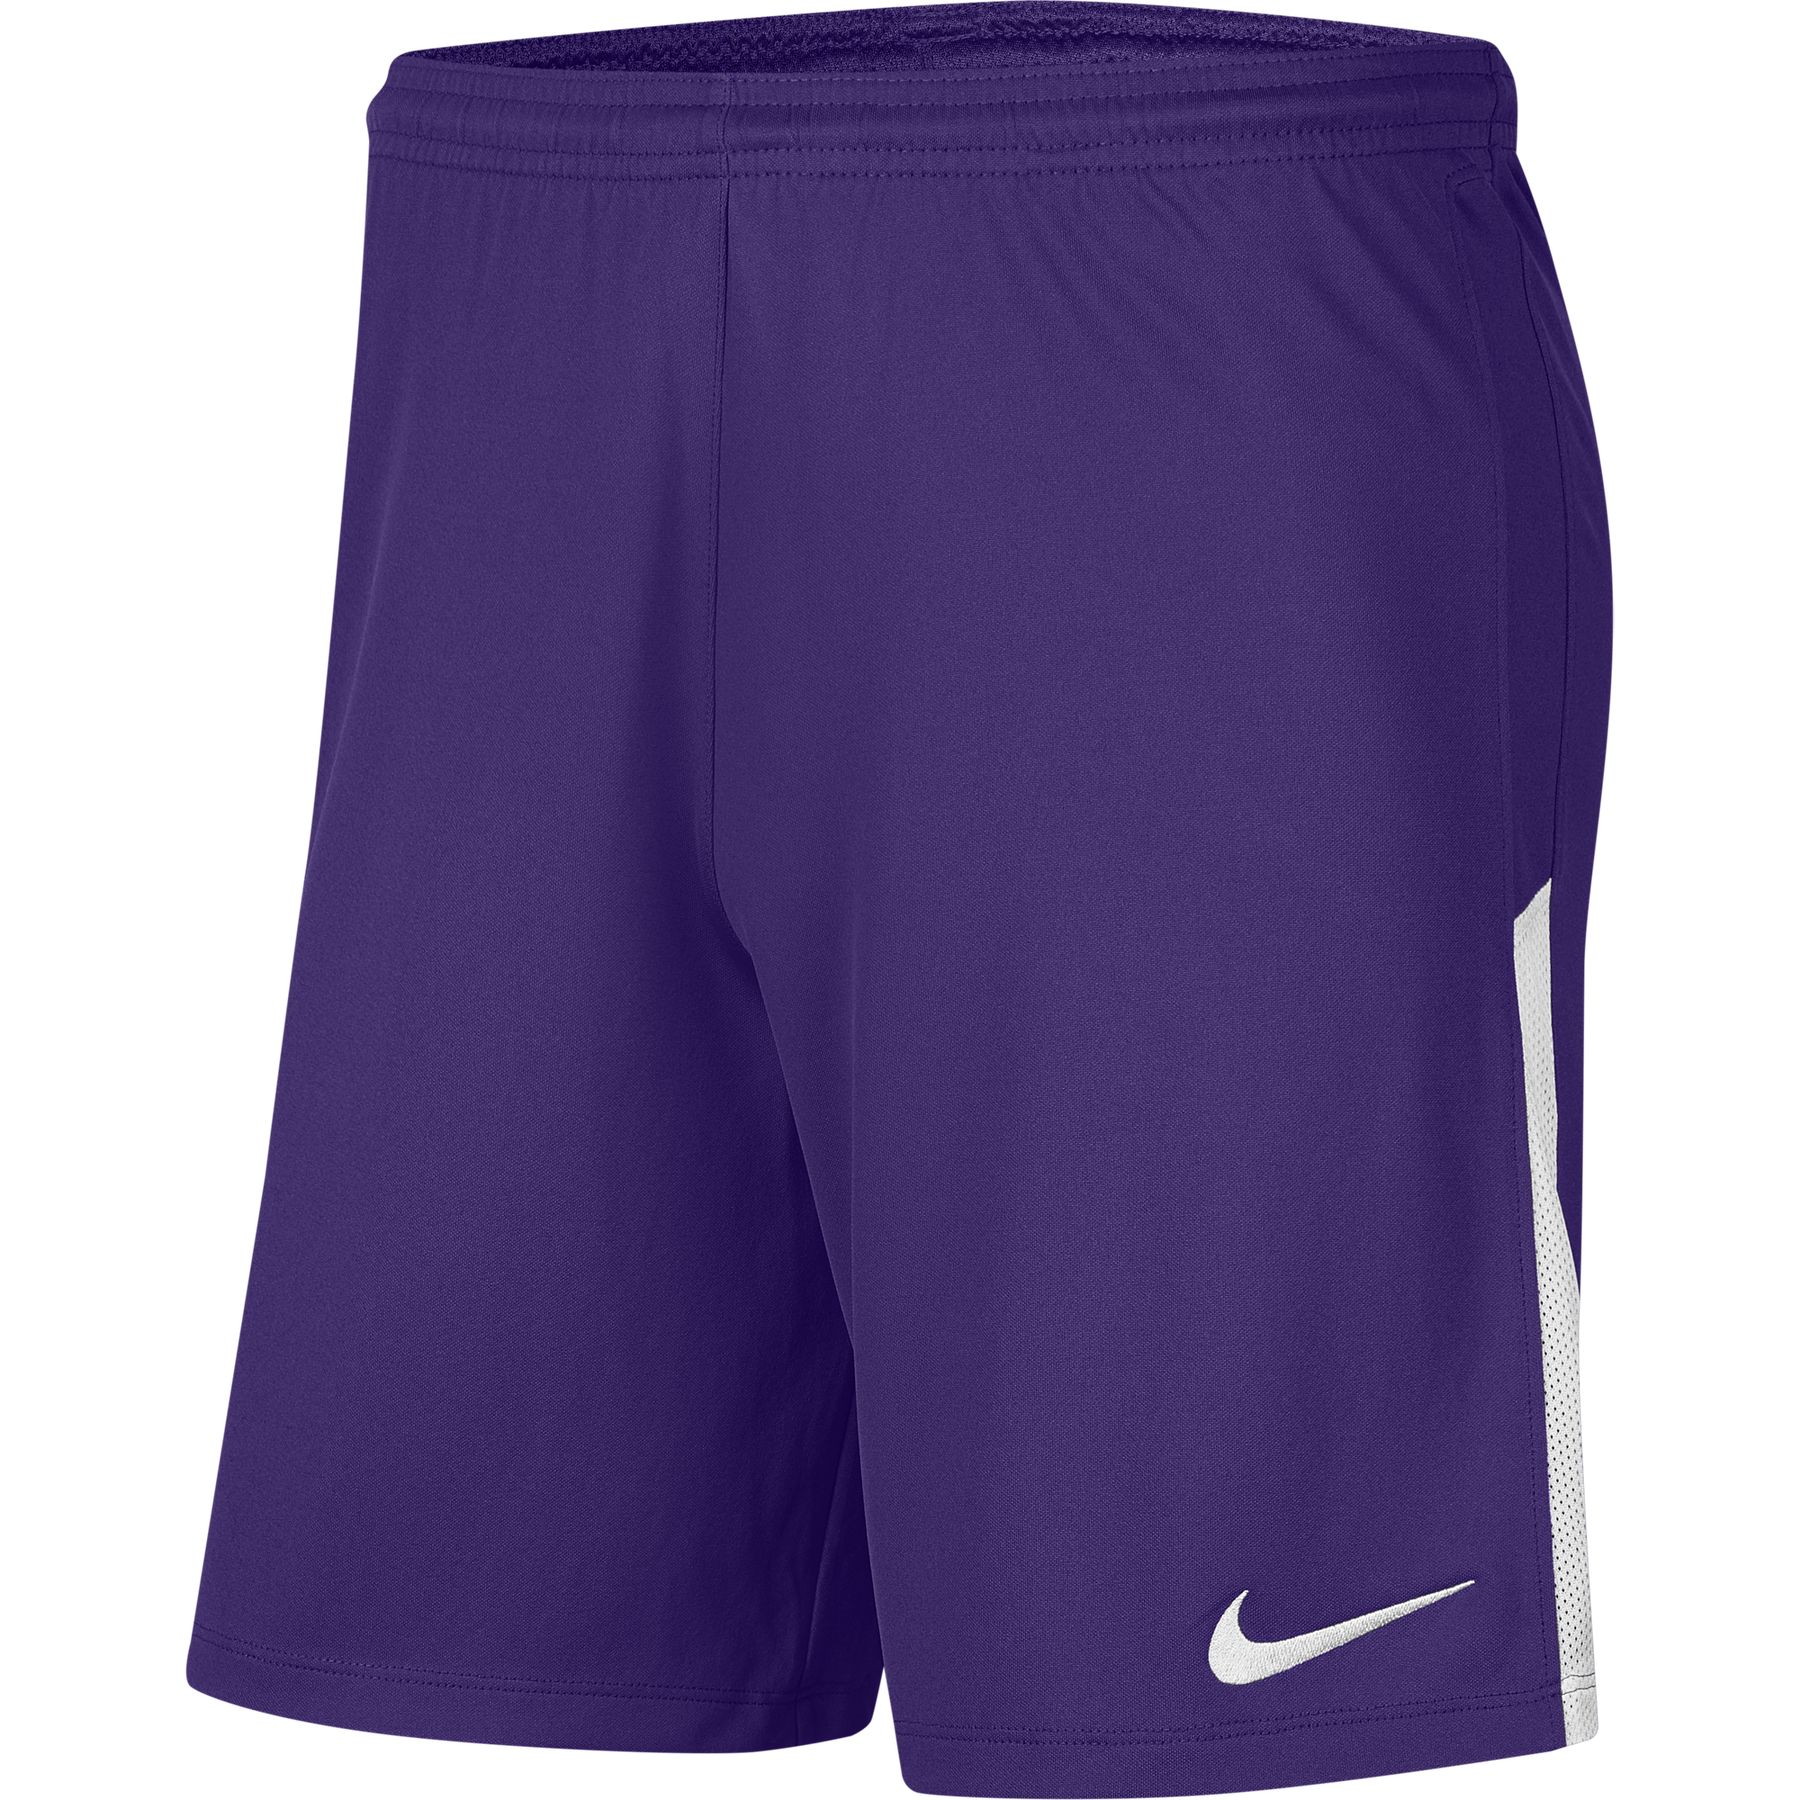 Nike League II Knit Short